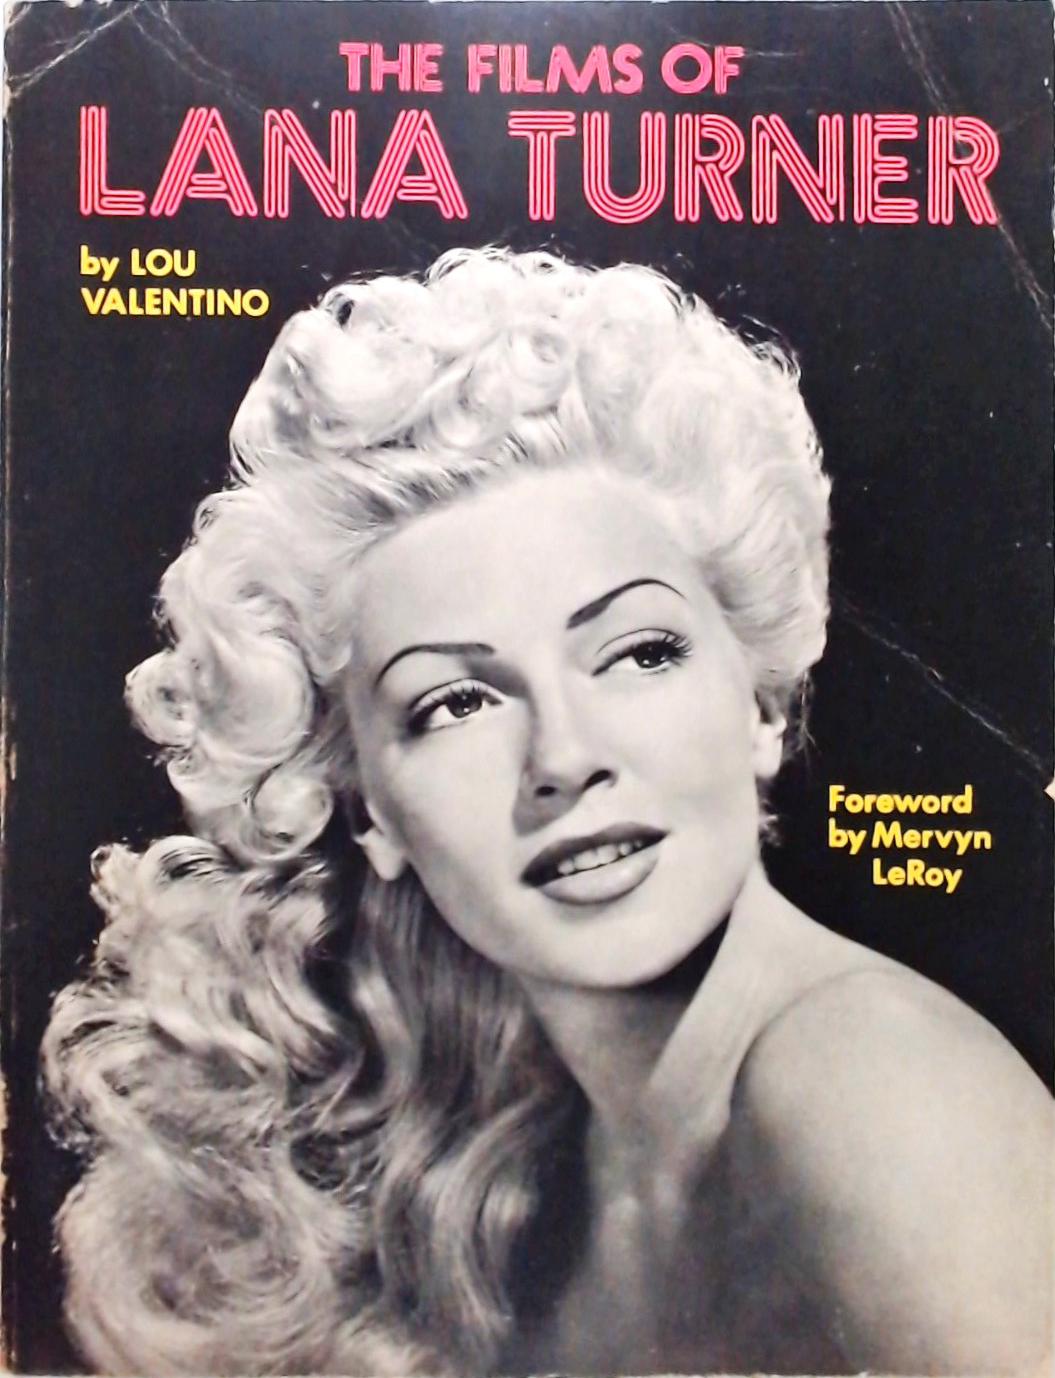 The Films of Lana Turner